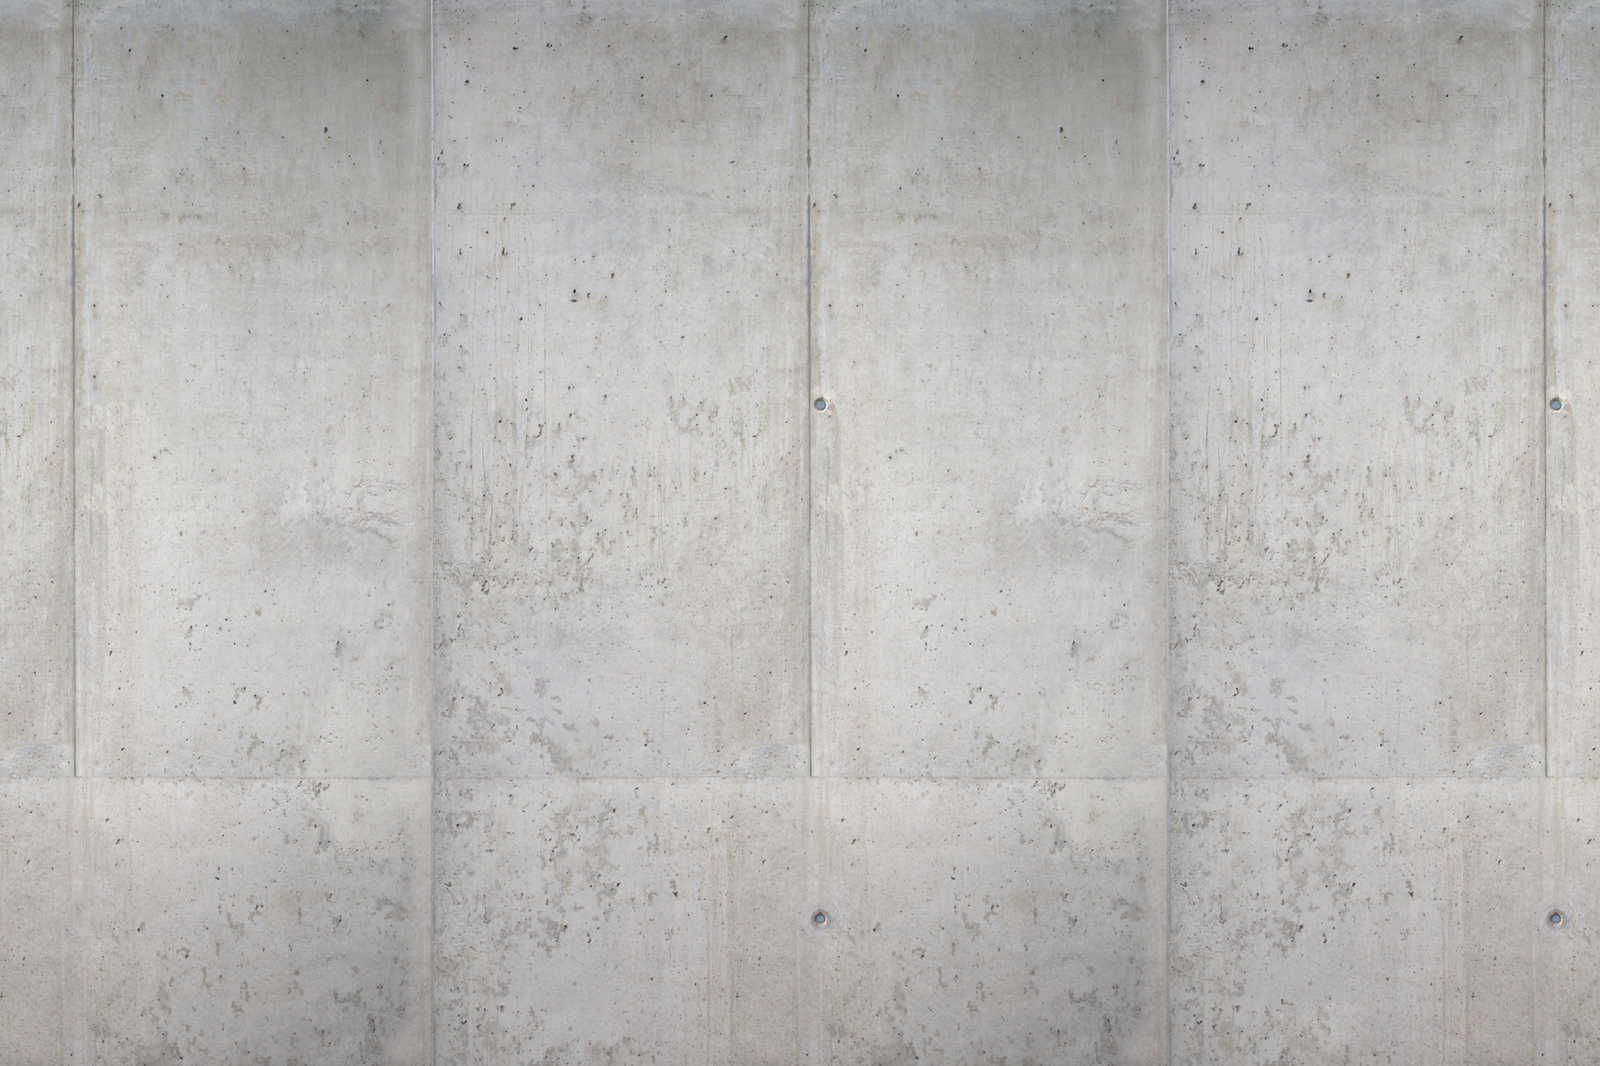             Canvas schilderij industriële stijl betonnen muur - 0.90 m x 0.60 m
        